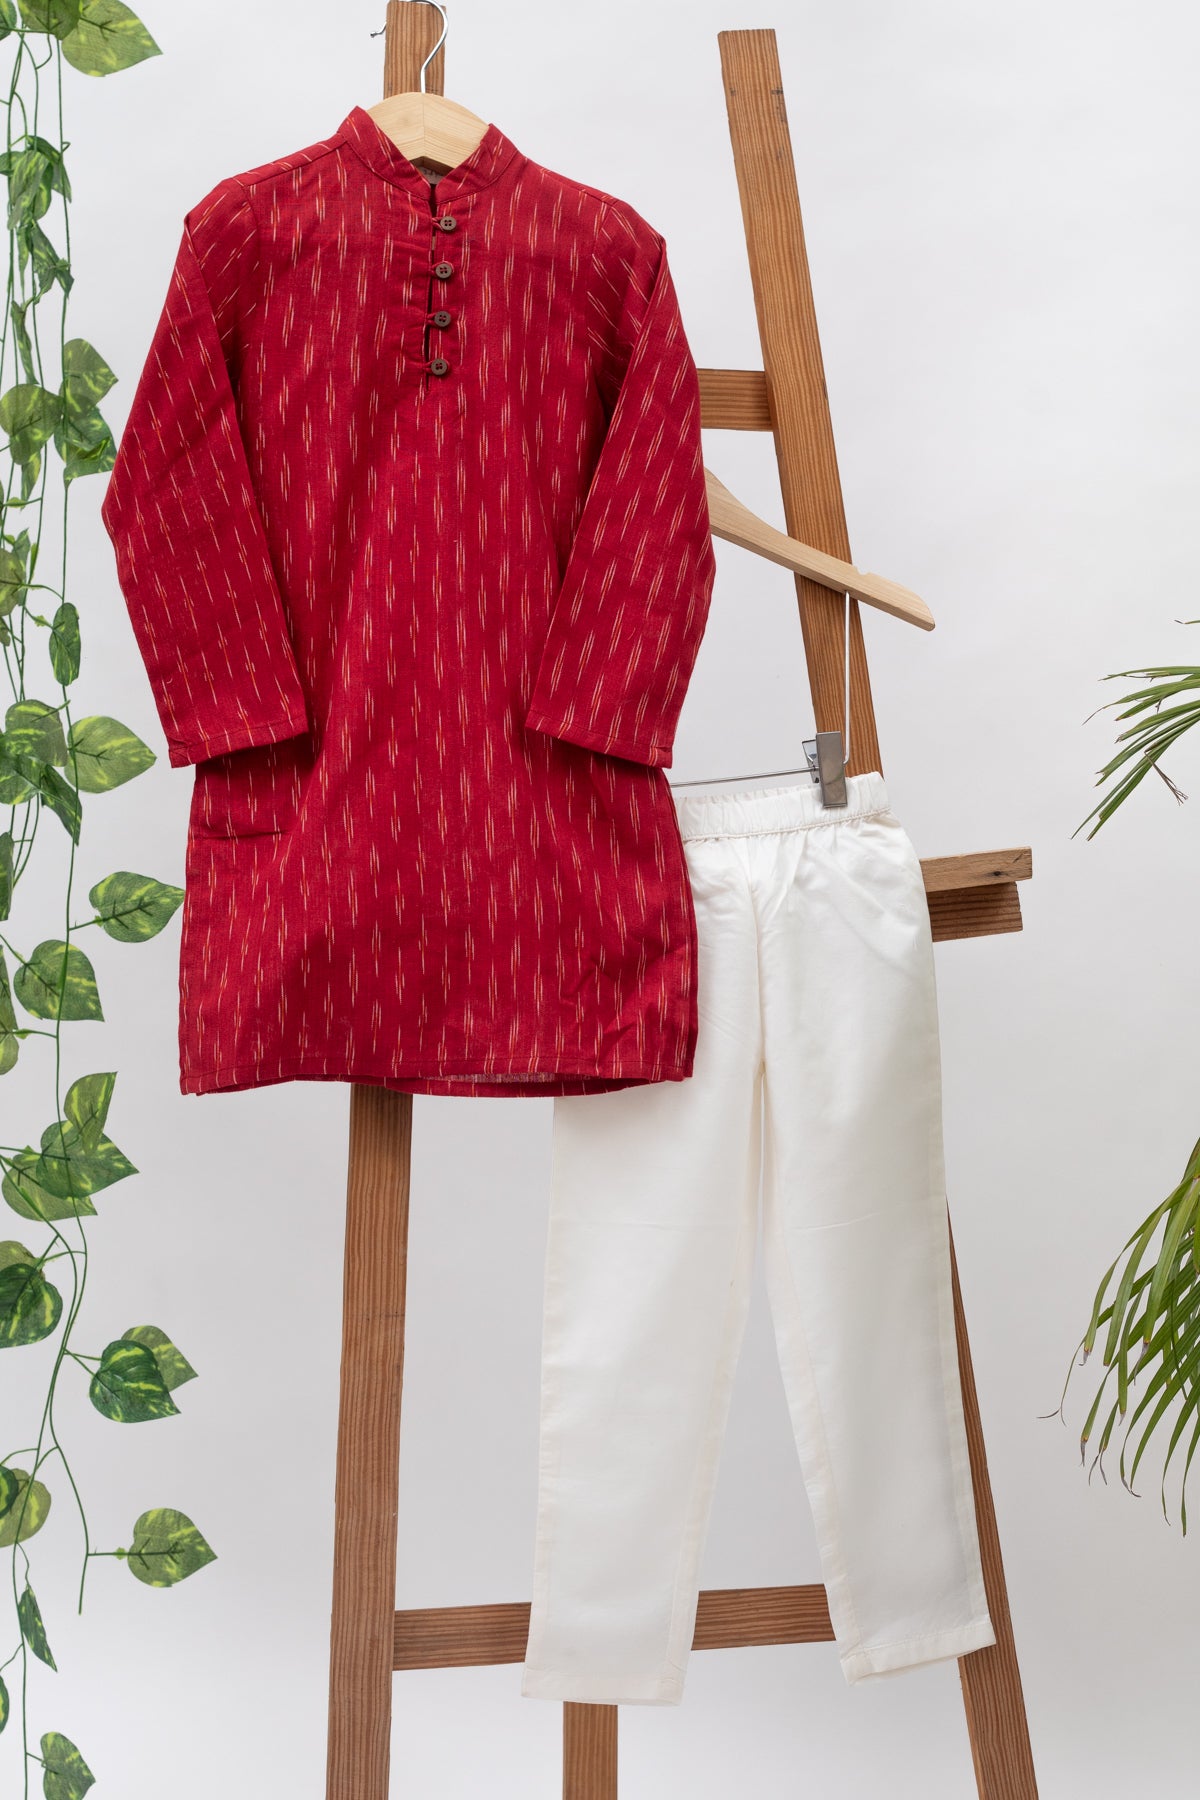 Veer red ikat kurta and pants for Boys-set